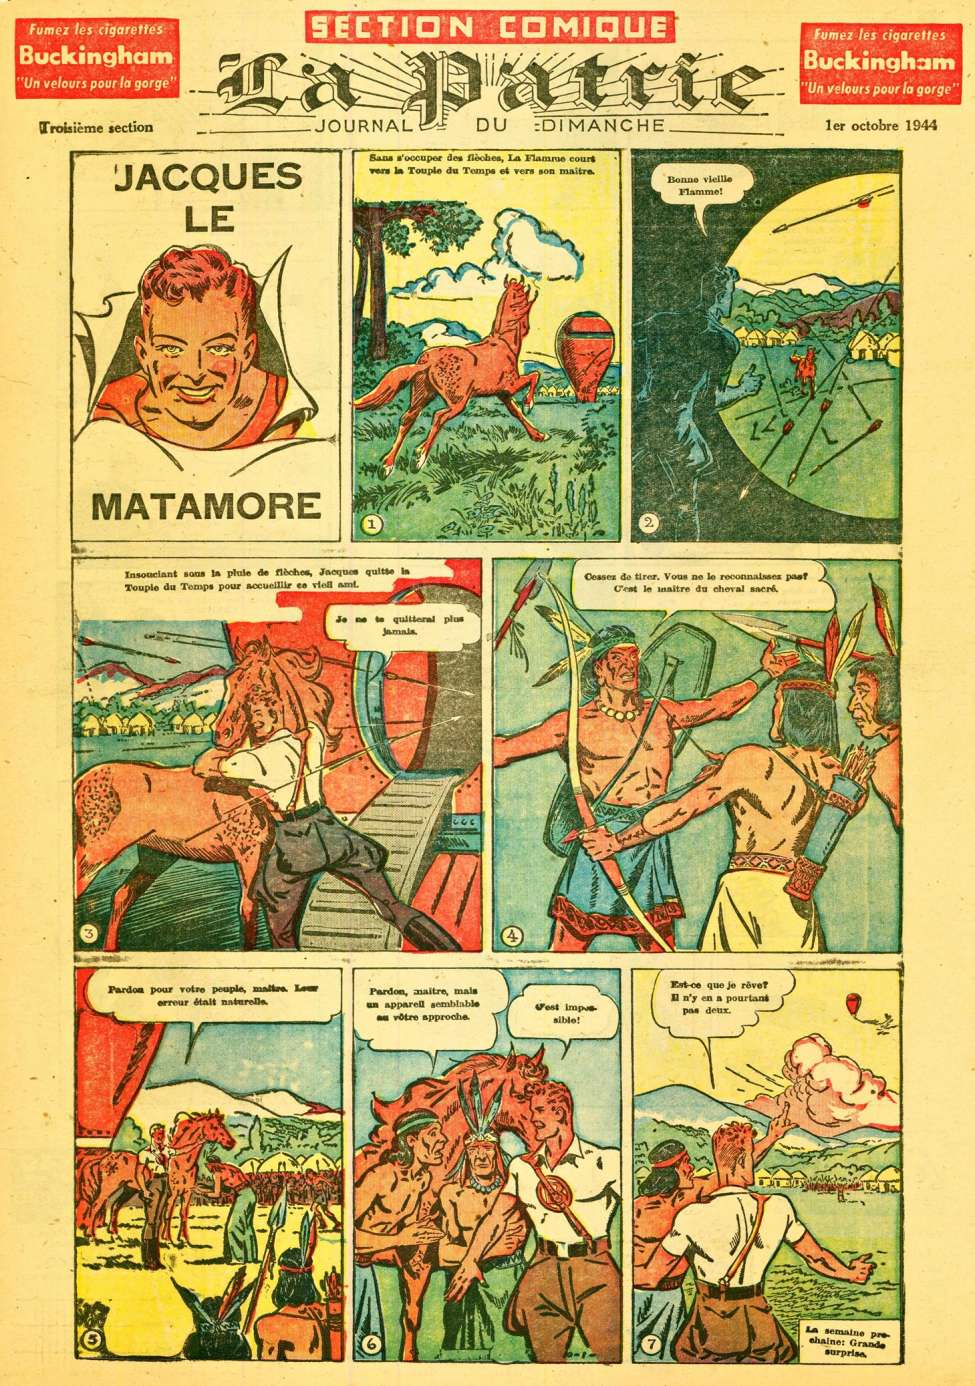 Comic Book Cover For La Patrie - Section Comique (1944-10-01)